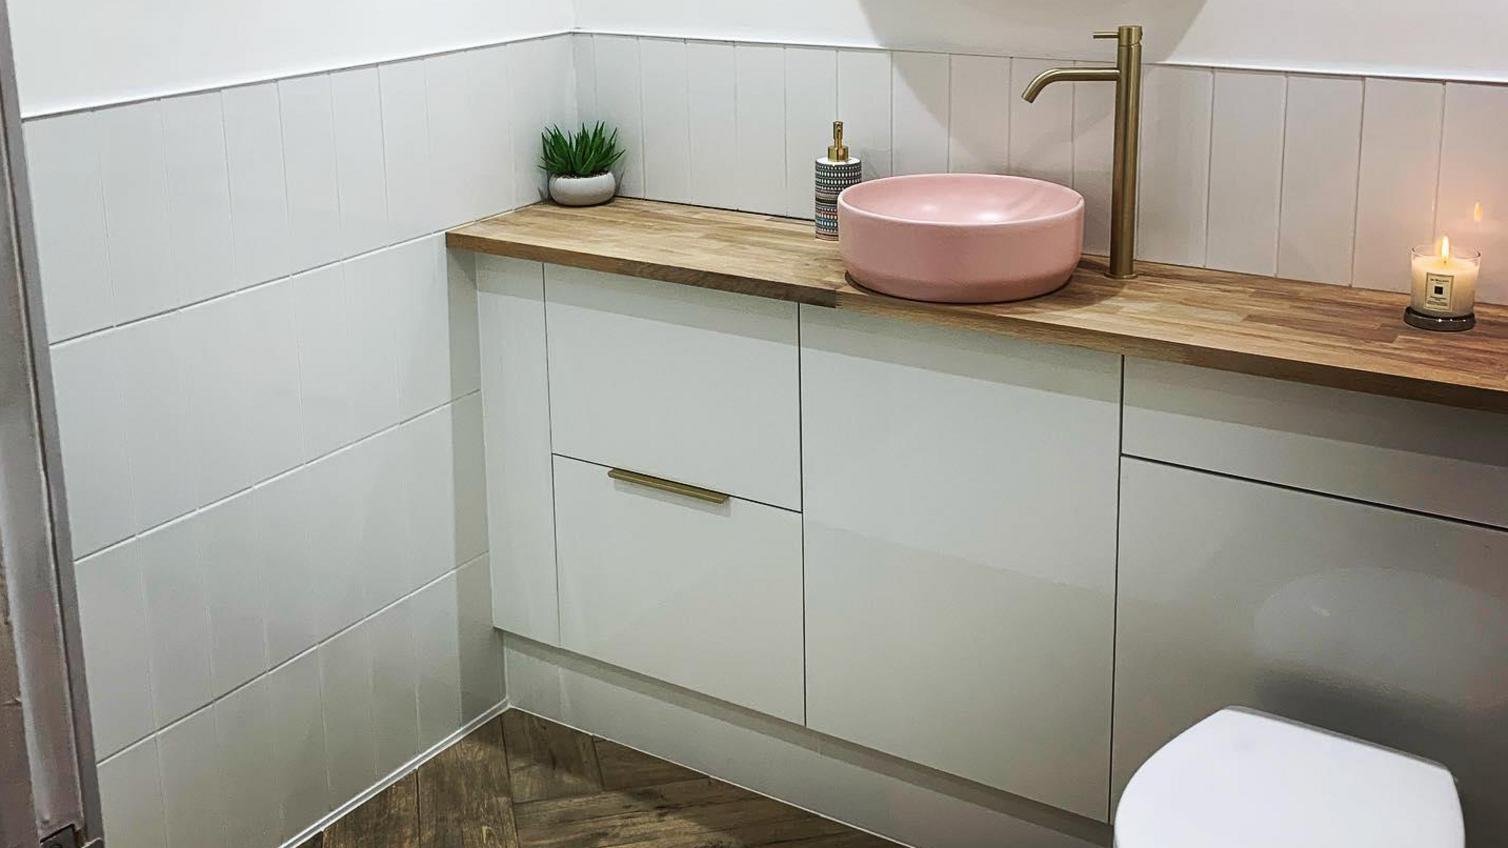 A modern grey bathroom idea using glossy slab cupboard doors. Includes an oak worktop, slimline handles and a timber floor.